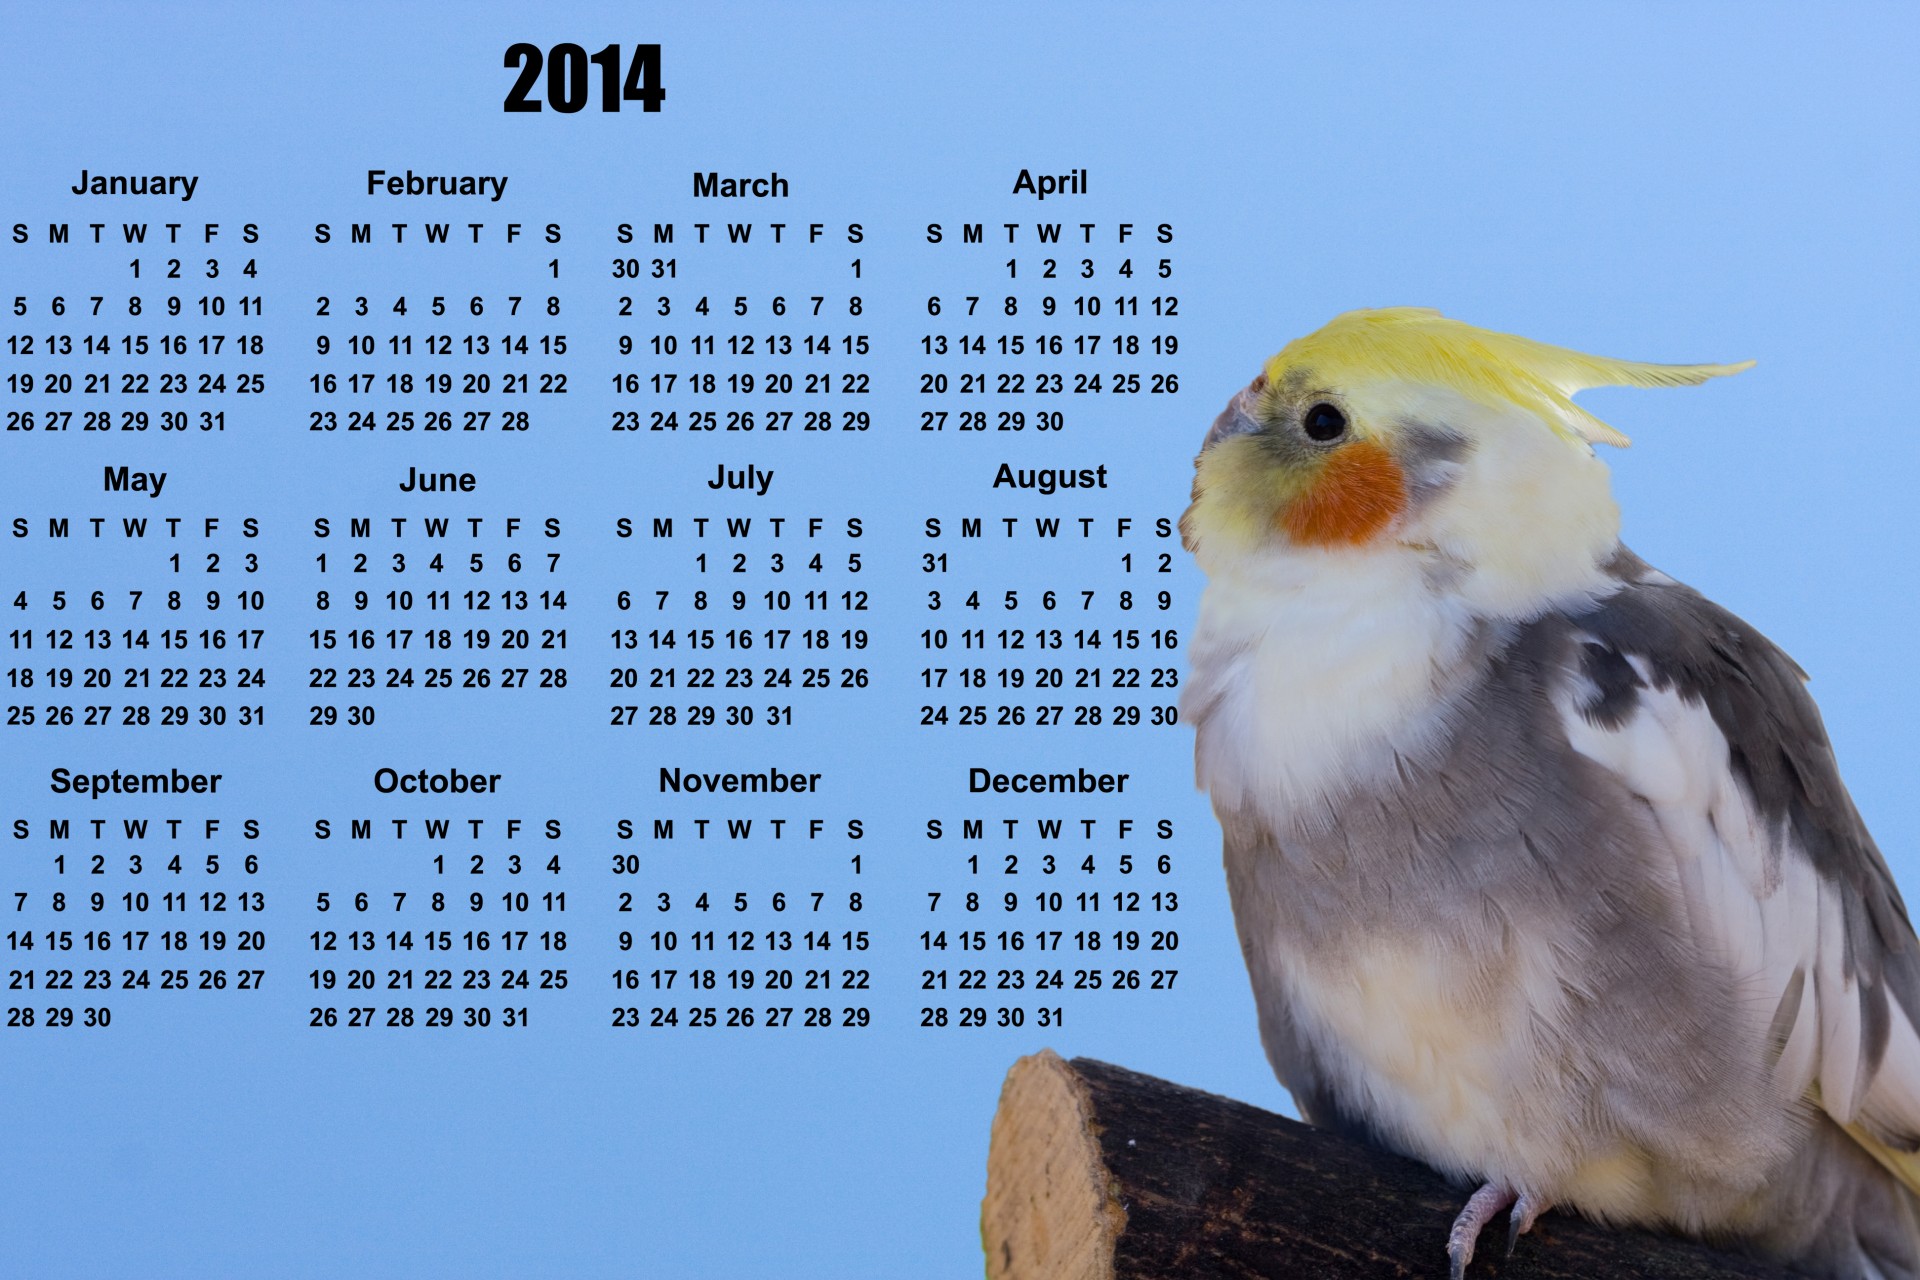 Bird, 2014 Календарь